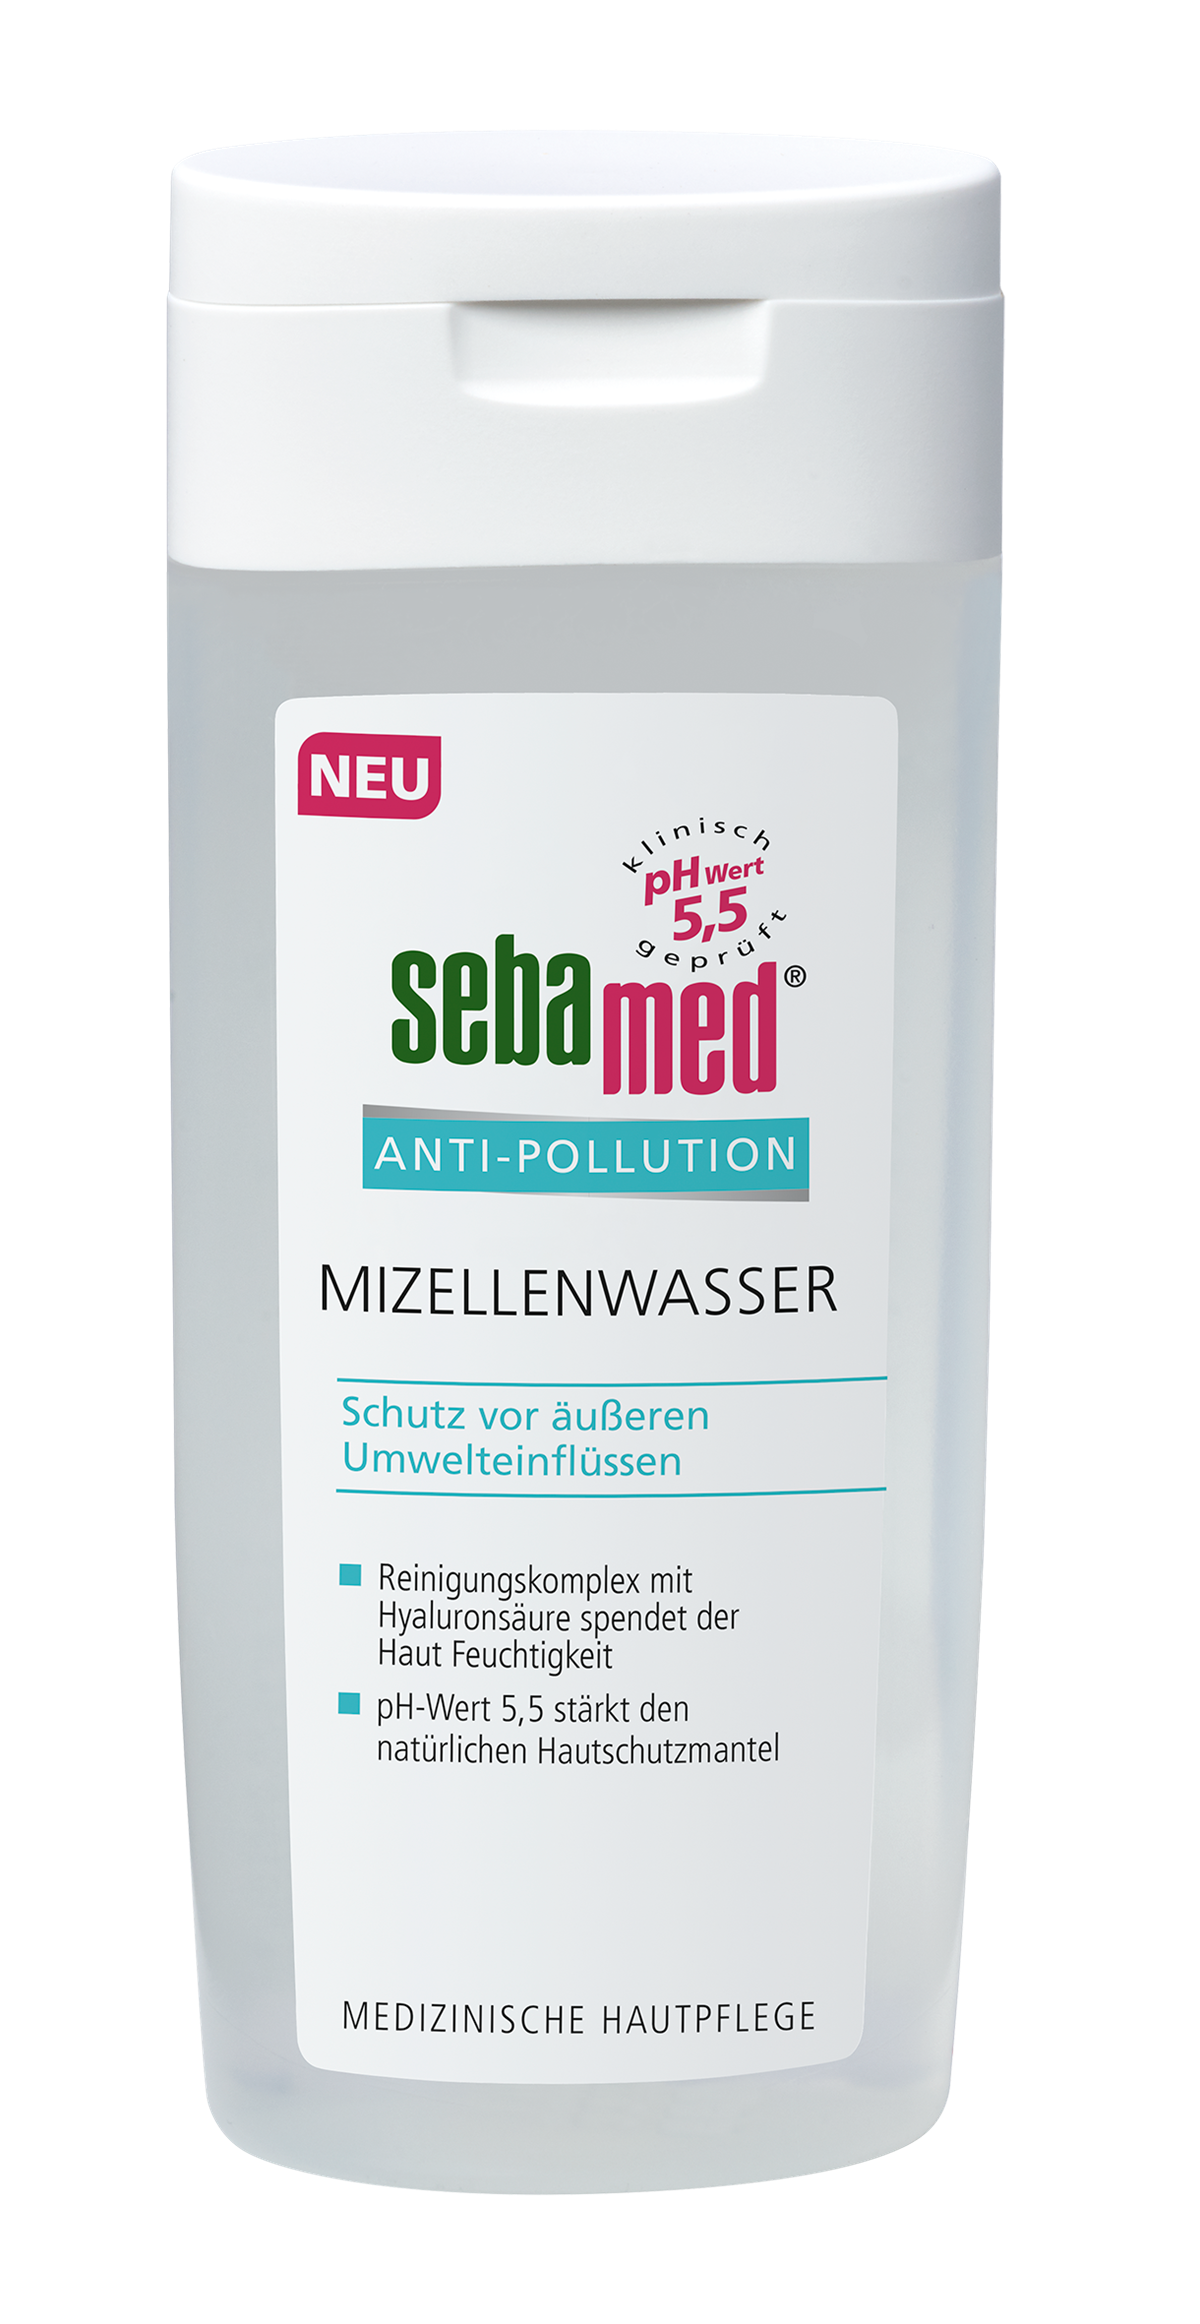 sebamed Anti-Pollution Mizellenwasser (200 ml): UVP 5,49 Euro